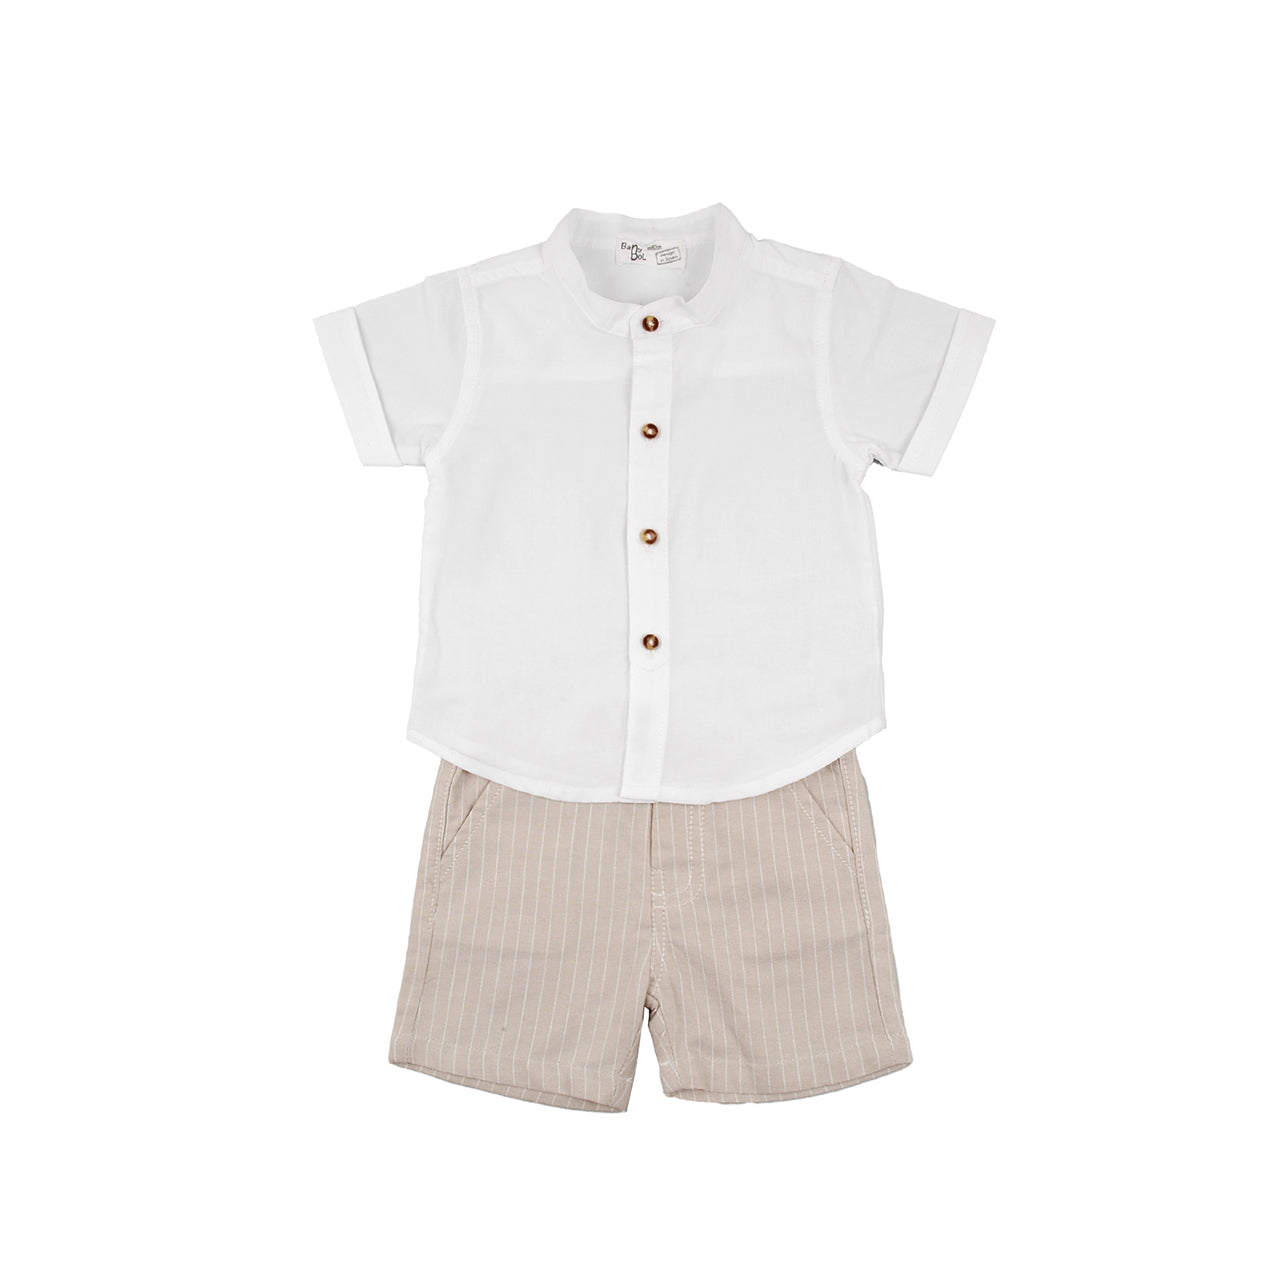 Beige boys shorts and white shirt by Babybol - Adora Childrenswear